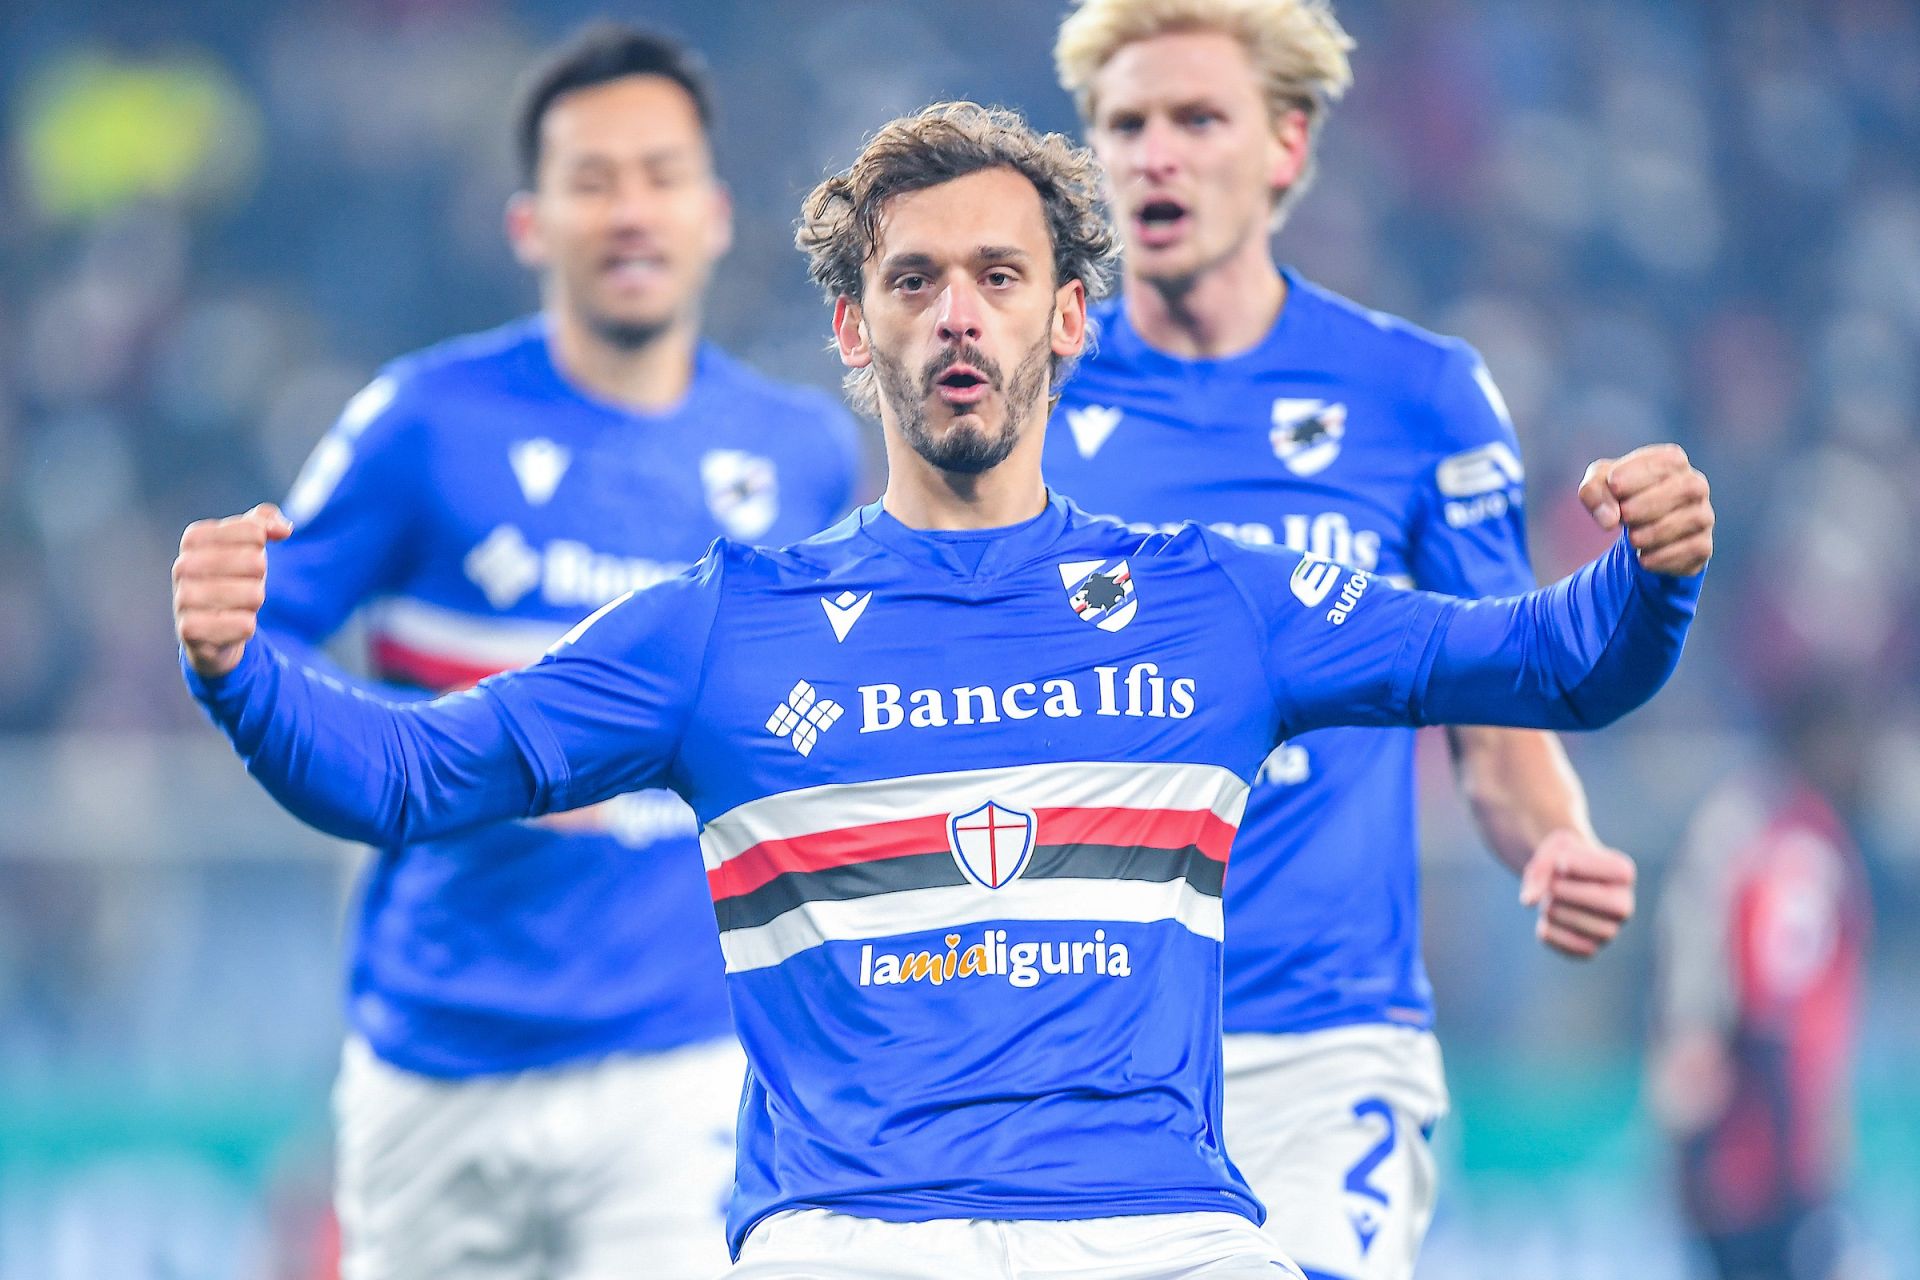 Gabbiadini: “We showed grit and determination” - U.C. Sampdoria